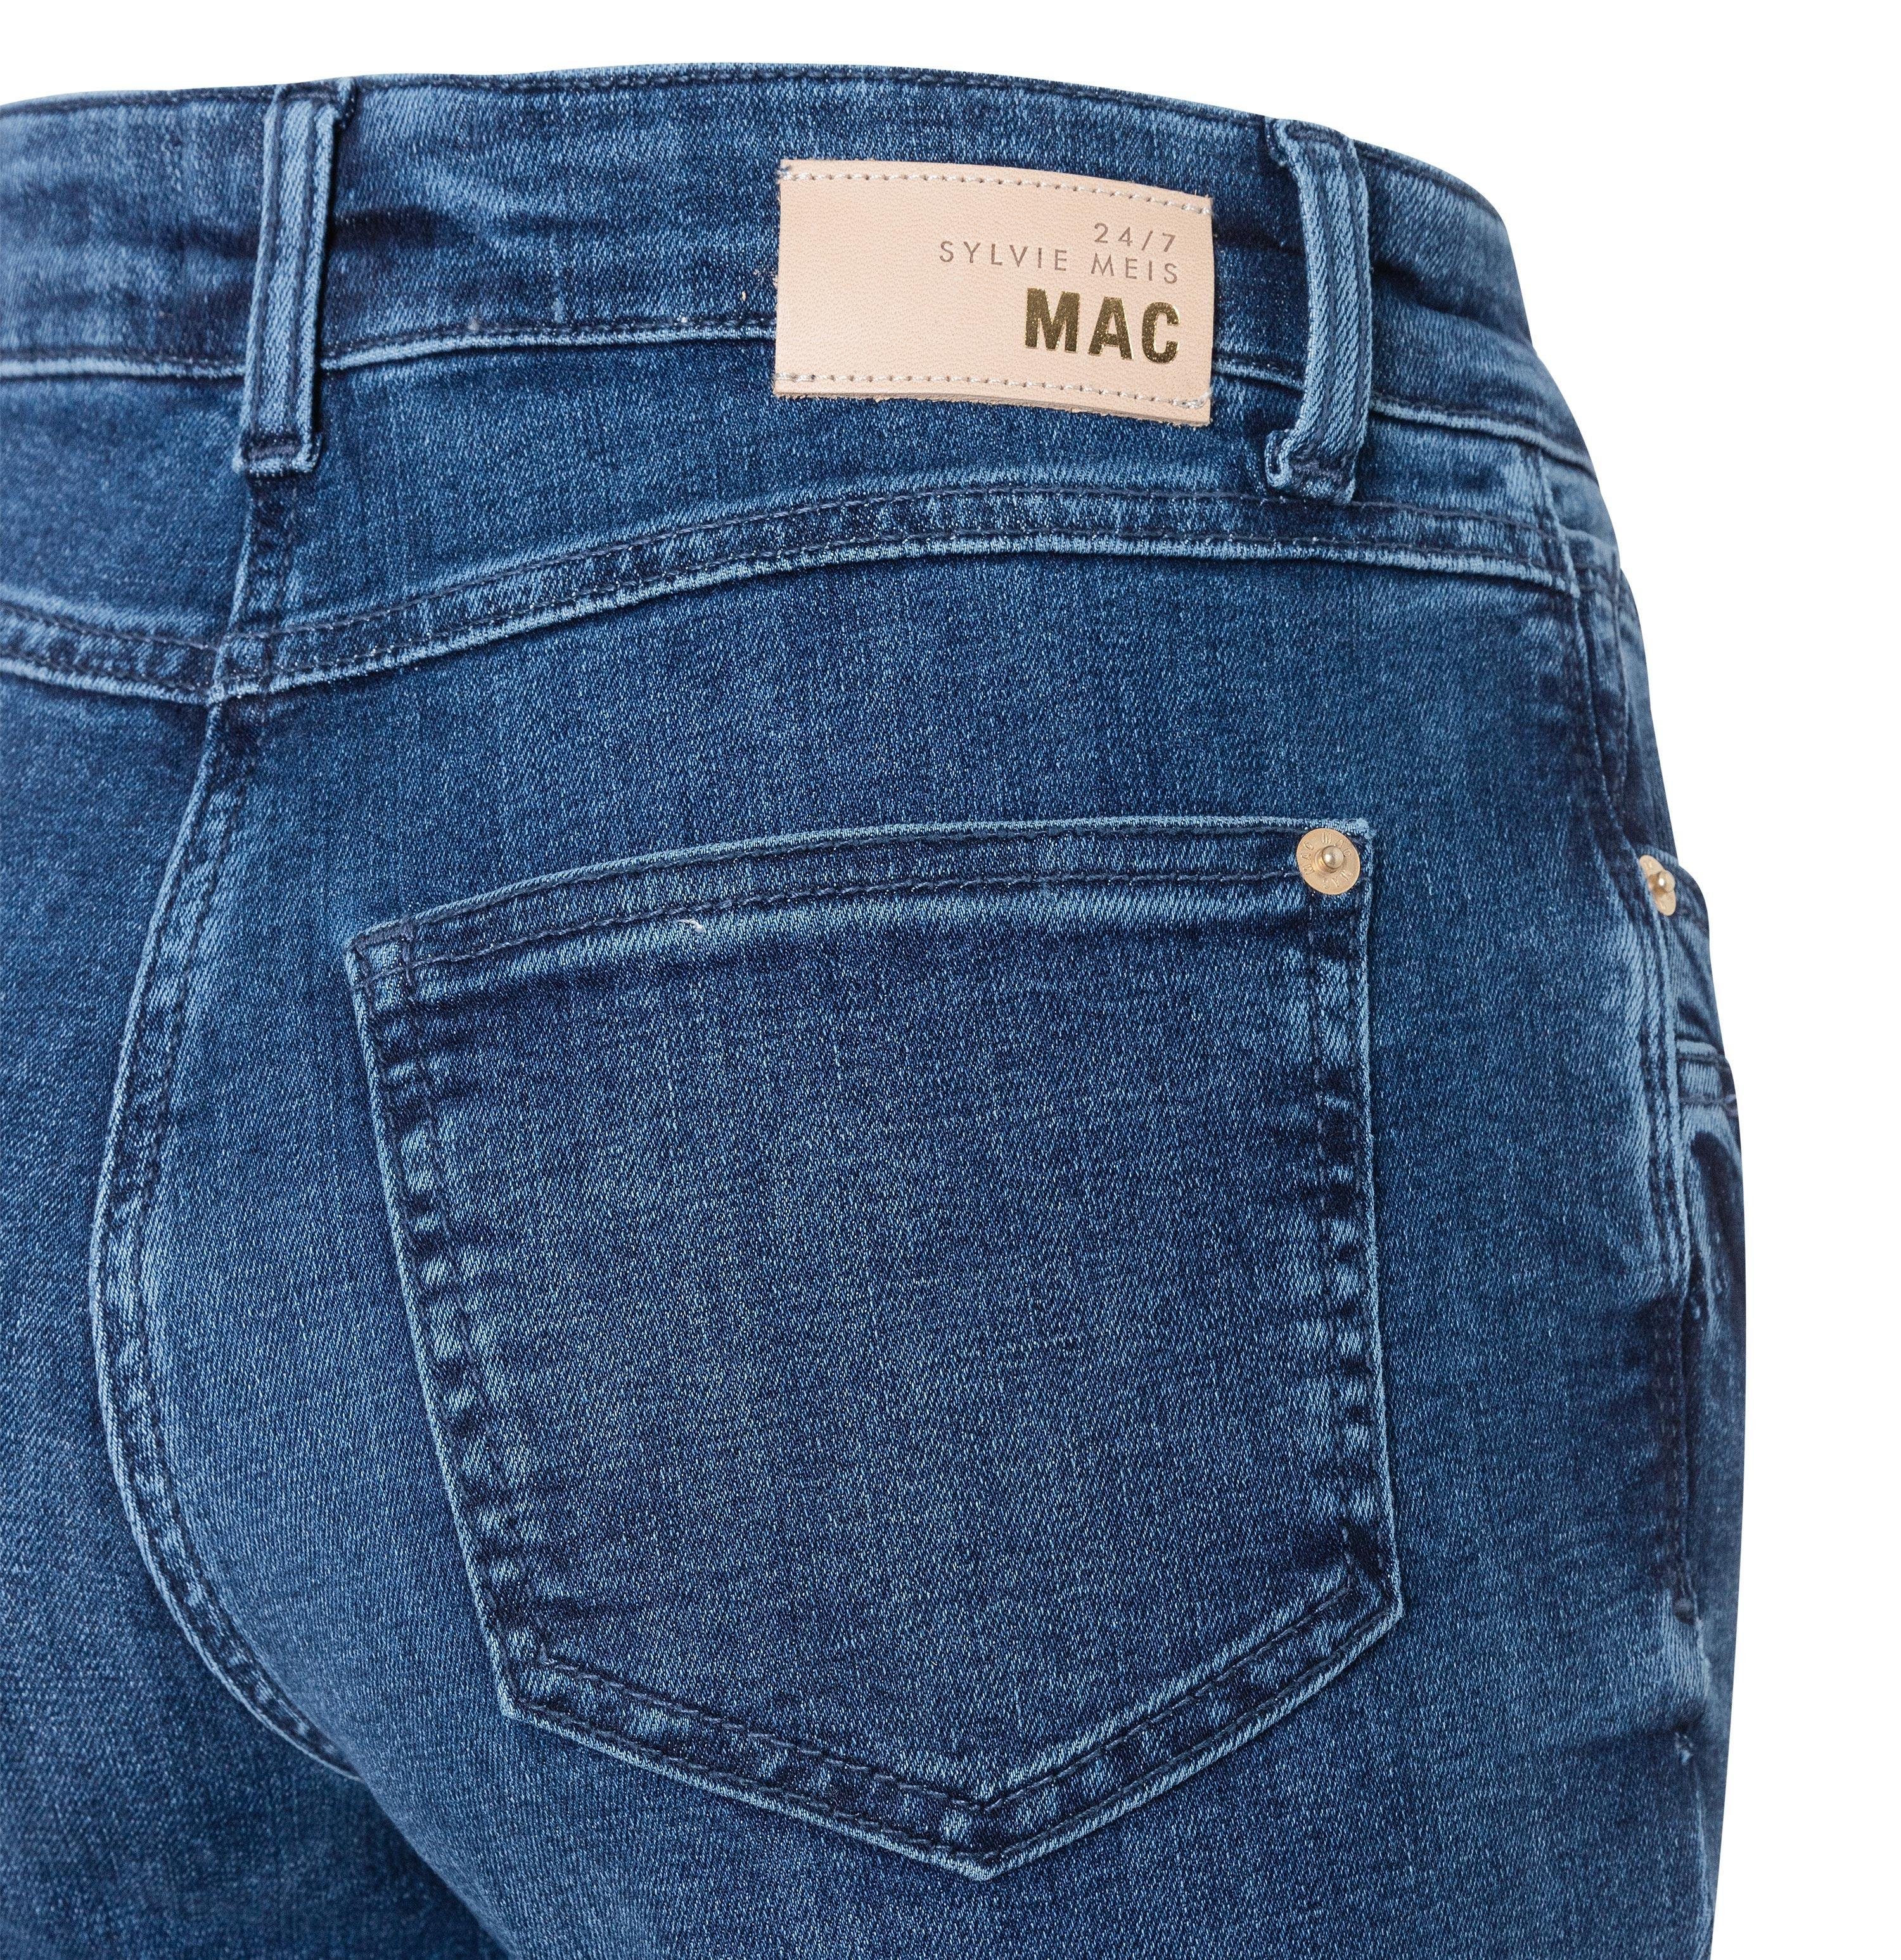 modern dark - SYLVIE MEL Stretch-Jeans blue MEIS MAC wash MAC D696 2620-90-0389L